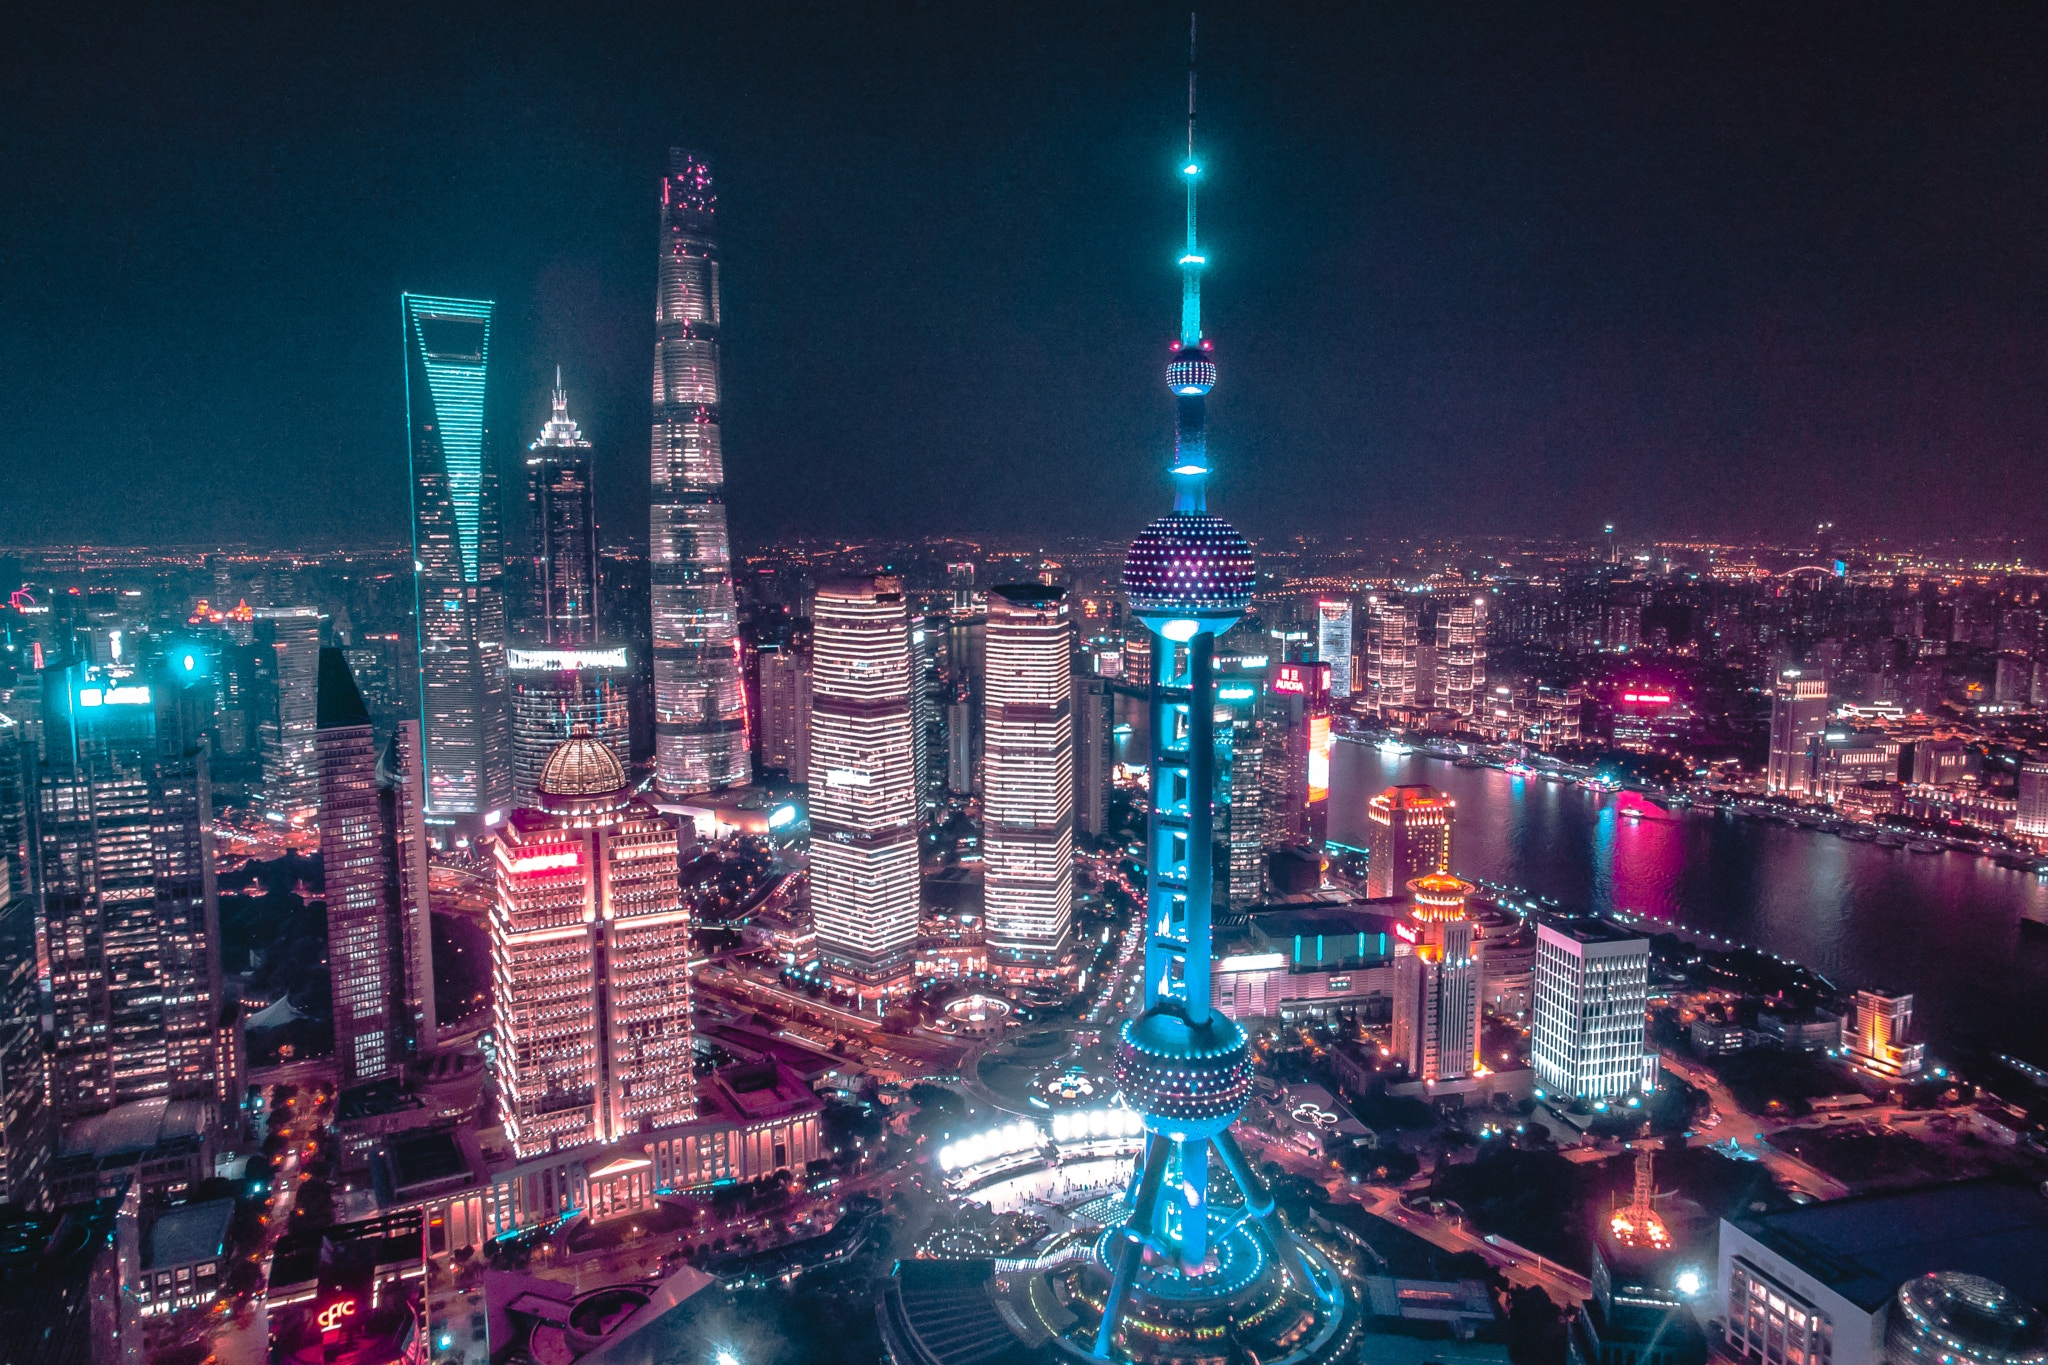 The skyline of Shanghai at night : Rodrigo.Argenton, Wikimedia Commons CC by 4.0